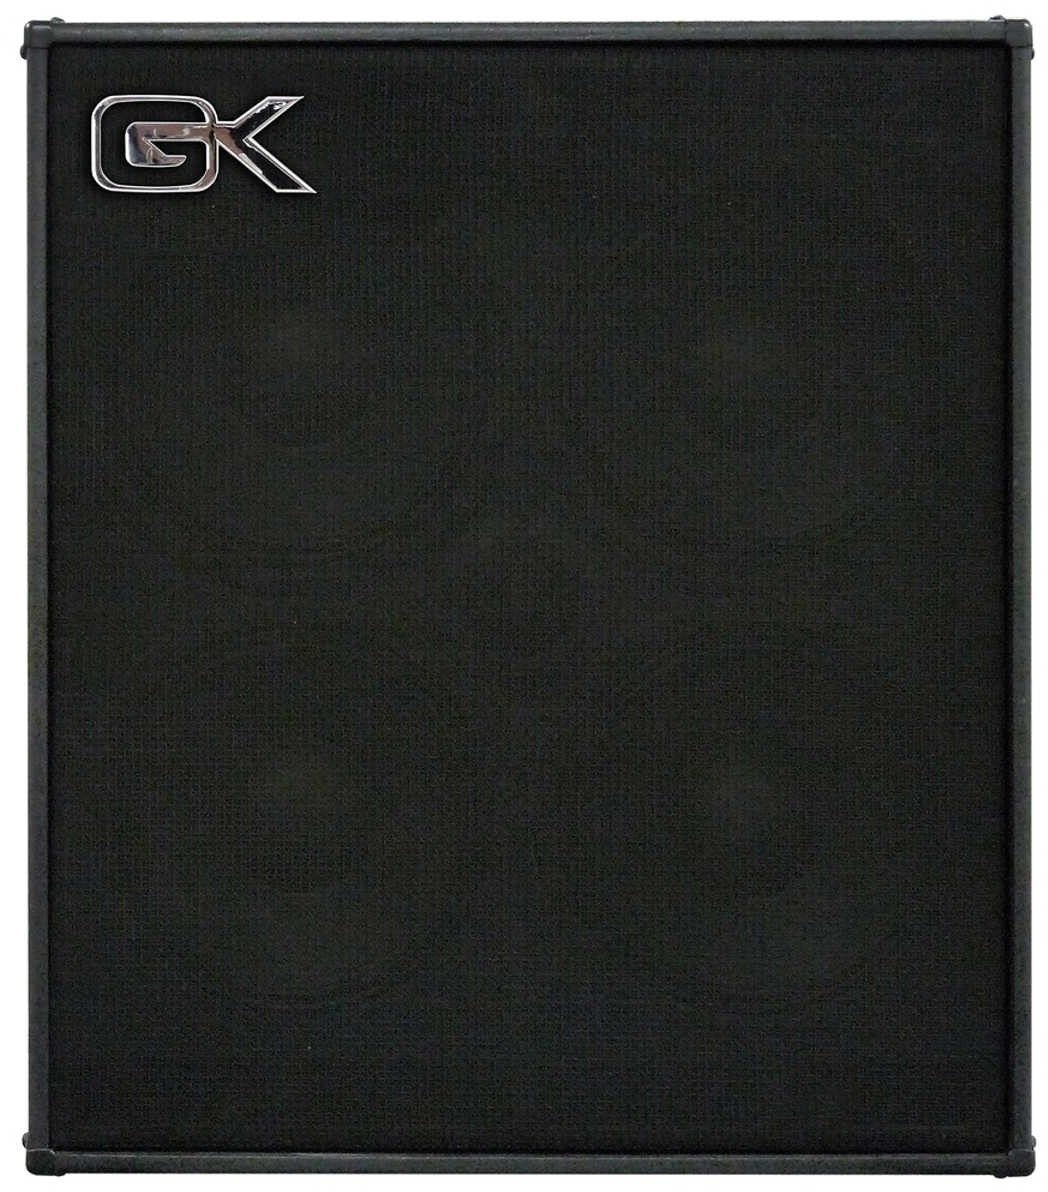 Basszusgitár hangláda Gallien Krueger CX-410 8 Ohm